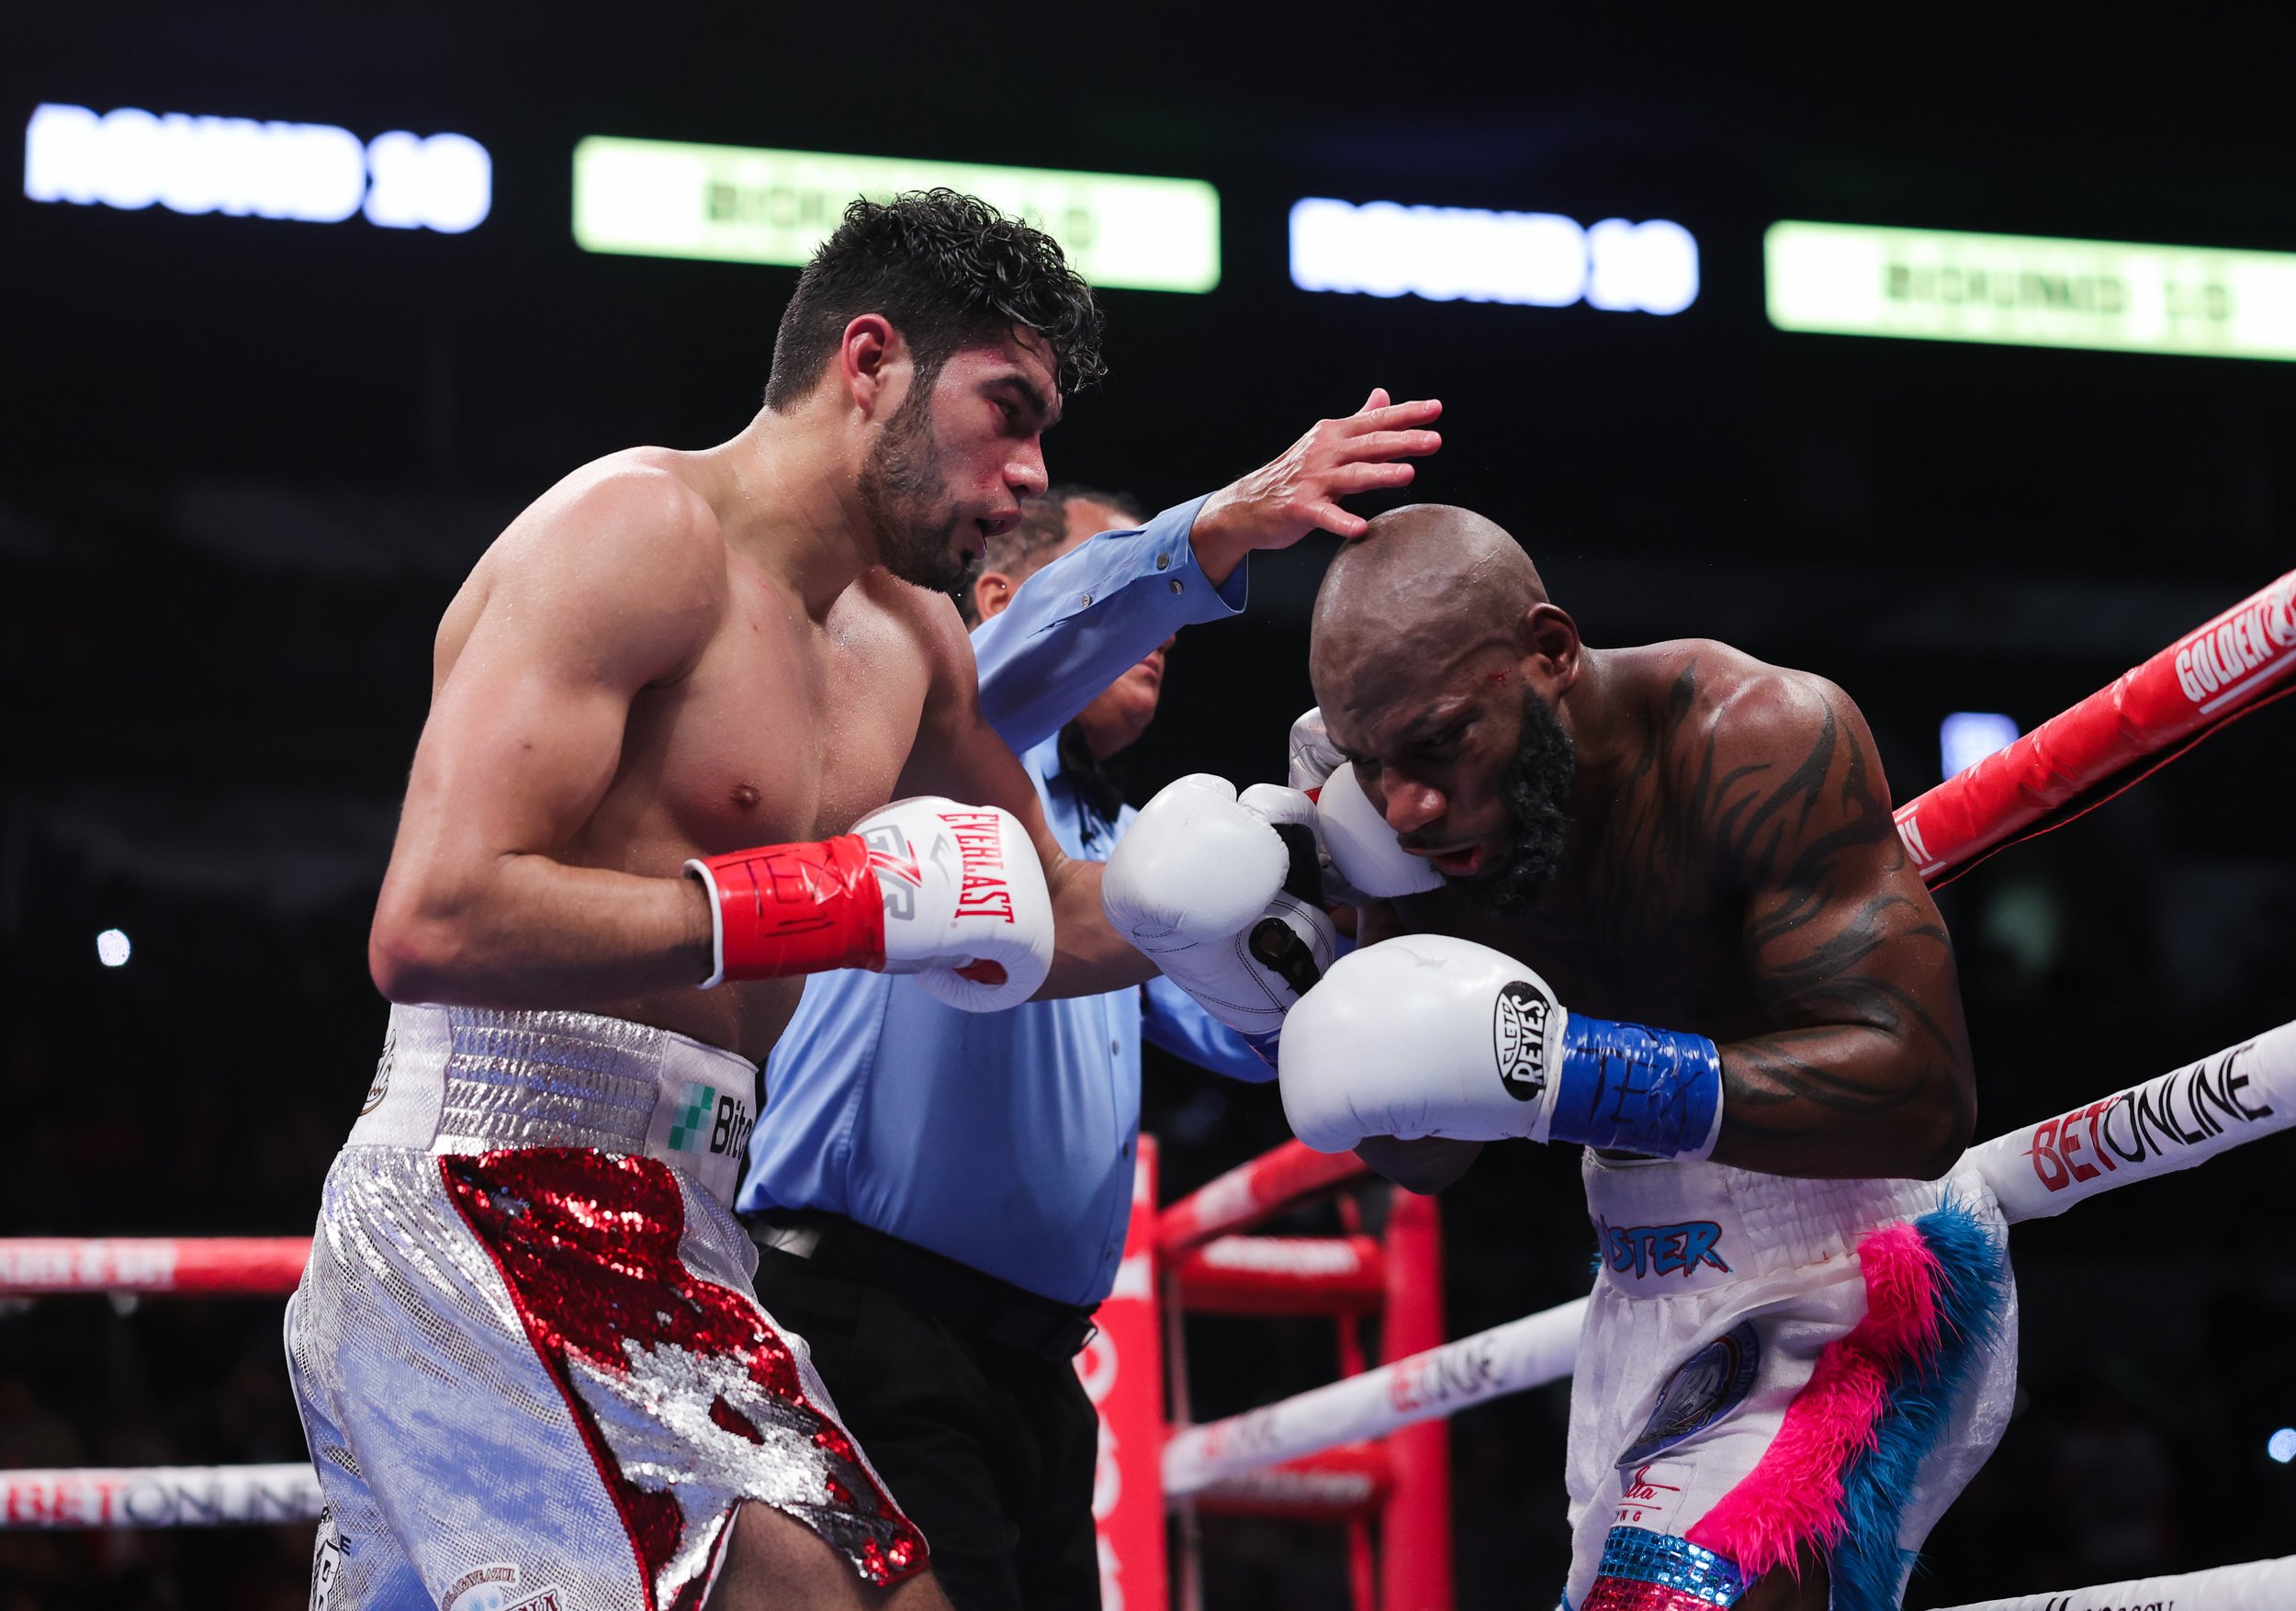 Ramirez vs Gonzalez - Fight Photos by Cris Esqueda9.JPEG